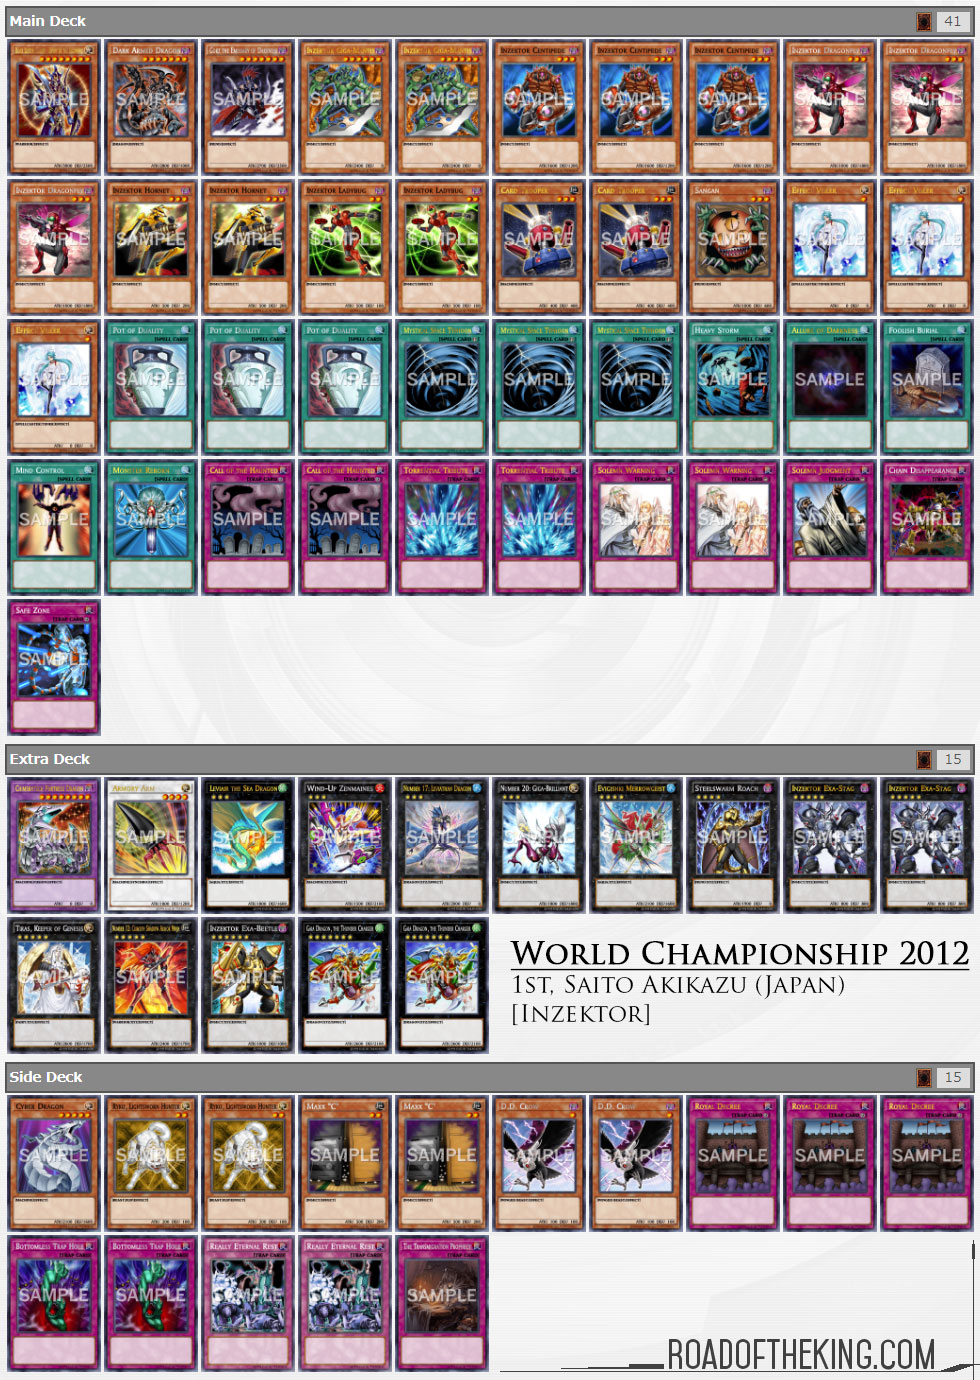 Yu-Gi-Oh! 5D's World Championship 2011 - Exodia FTK! 